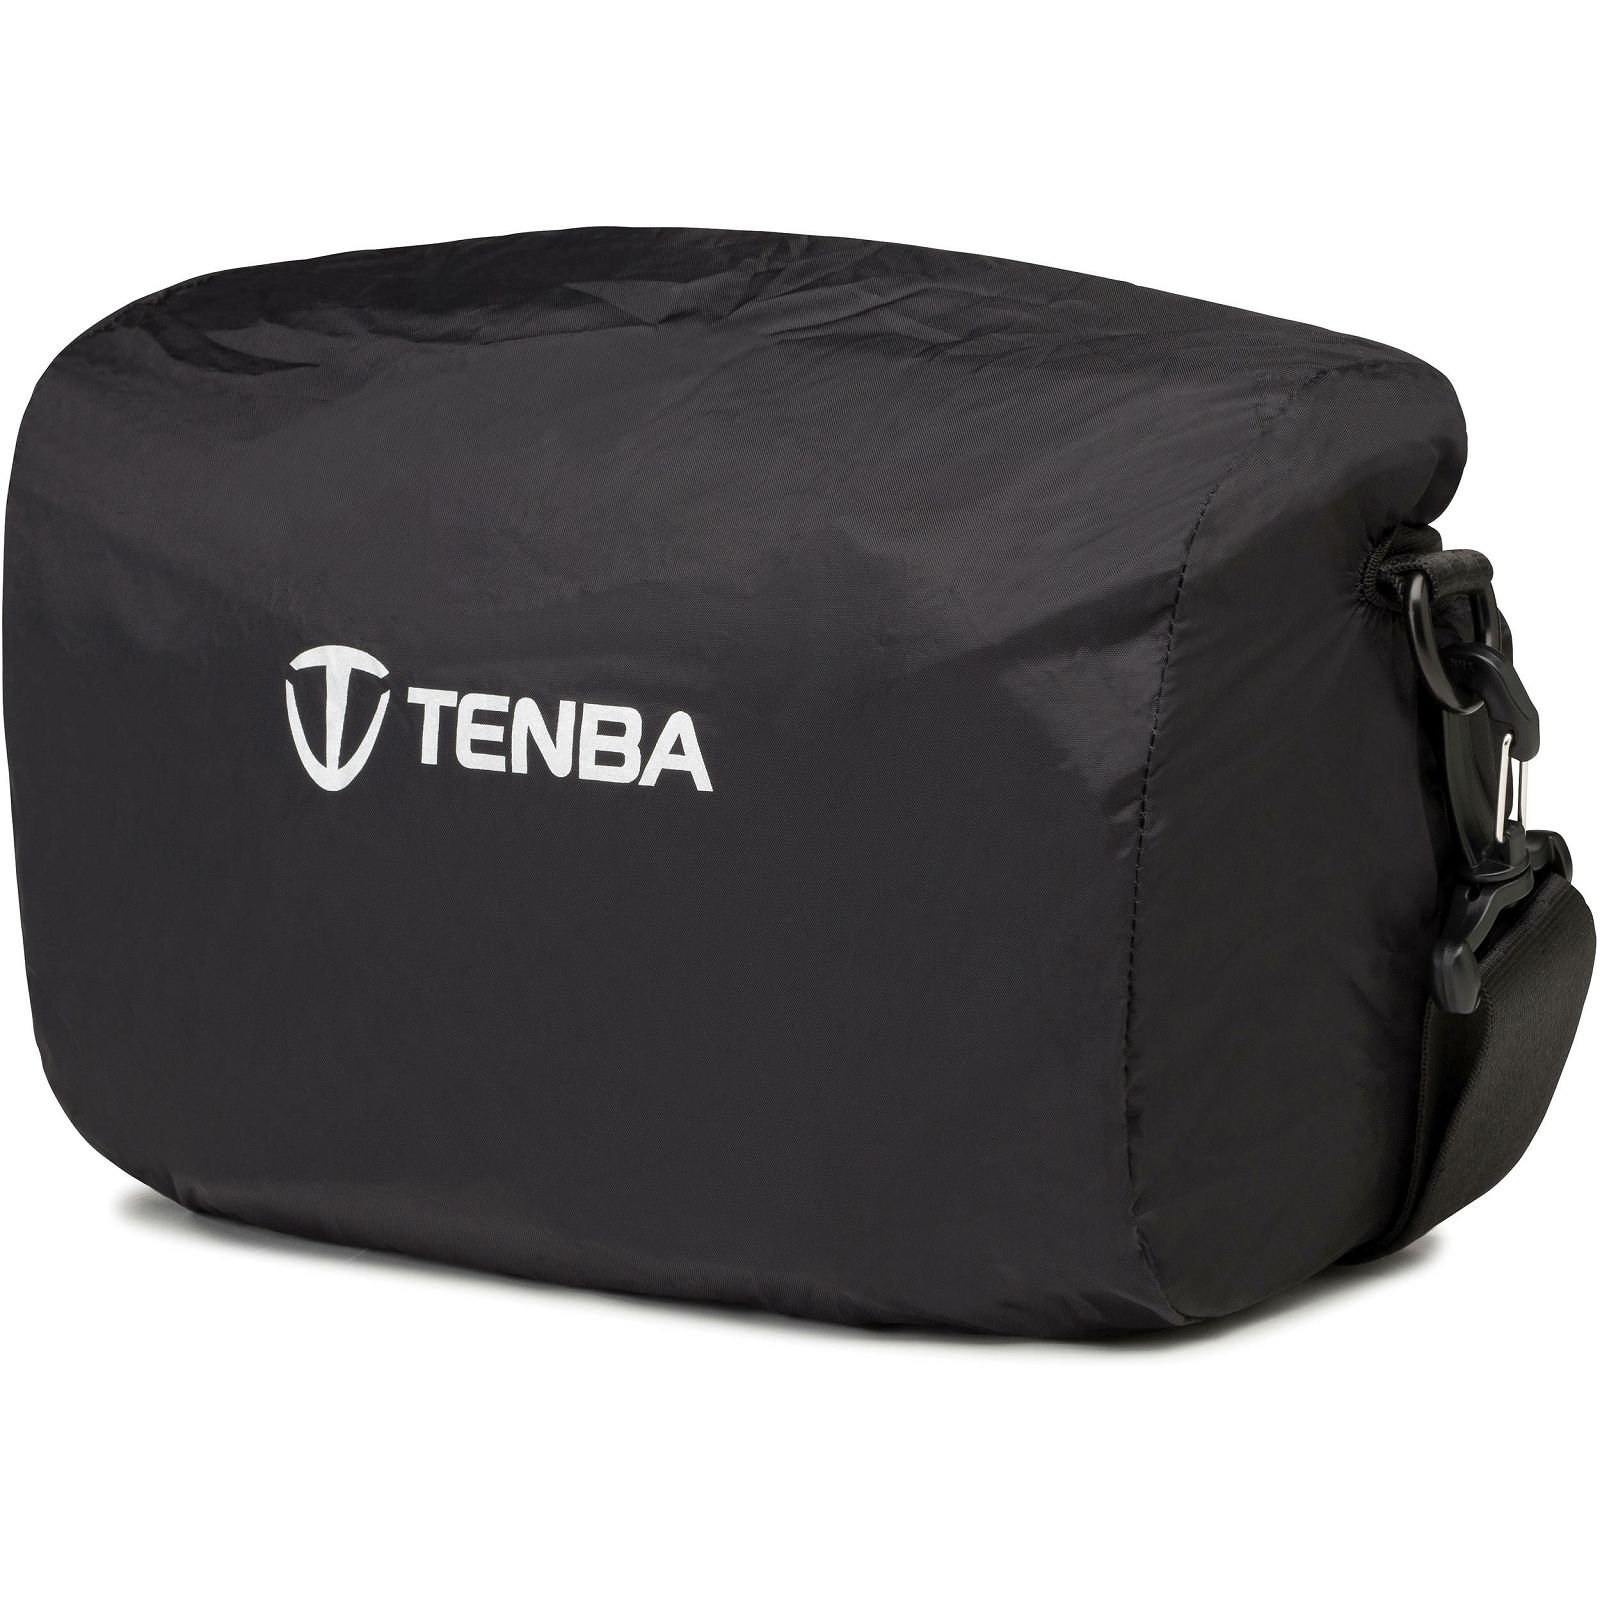 Tenba Messenger DNA 8 Graphite Bag torba za fotoaparat i foto opremu (638-421)